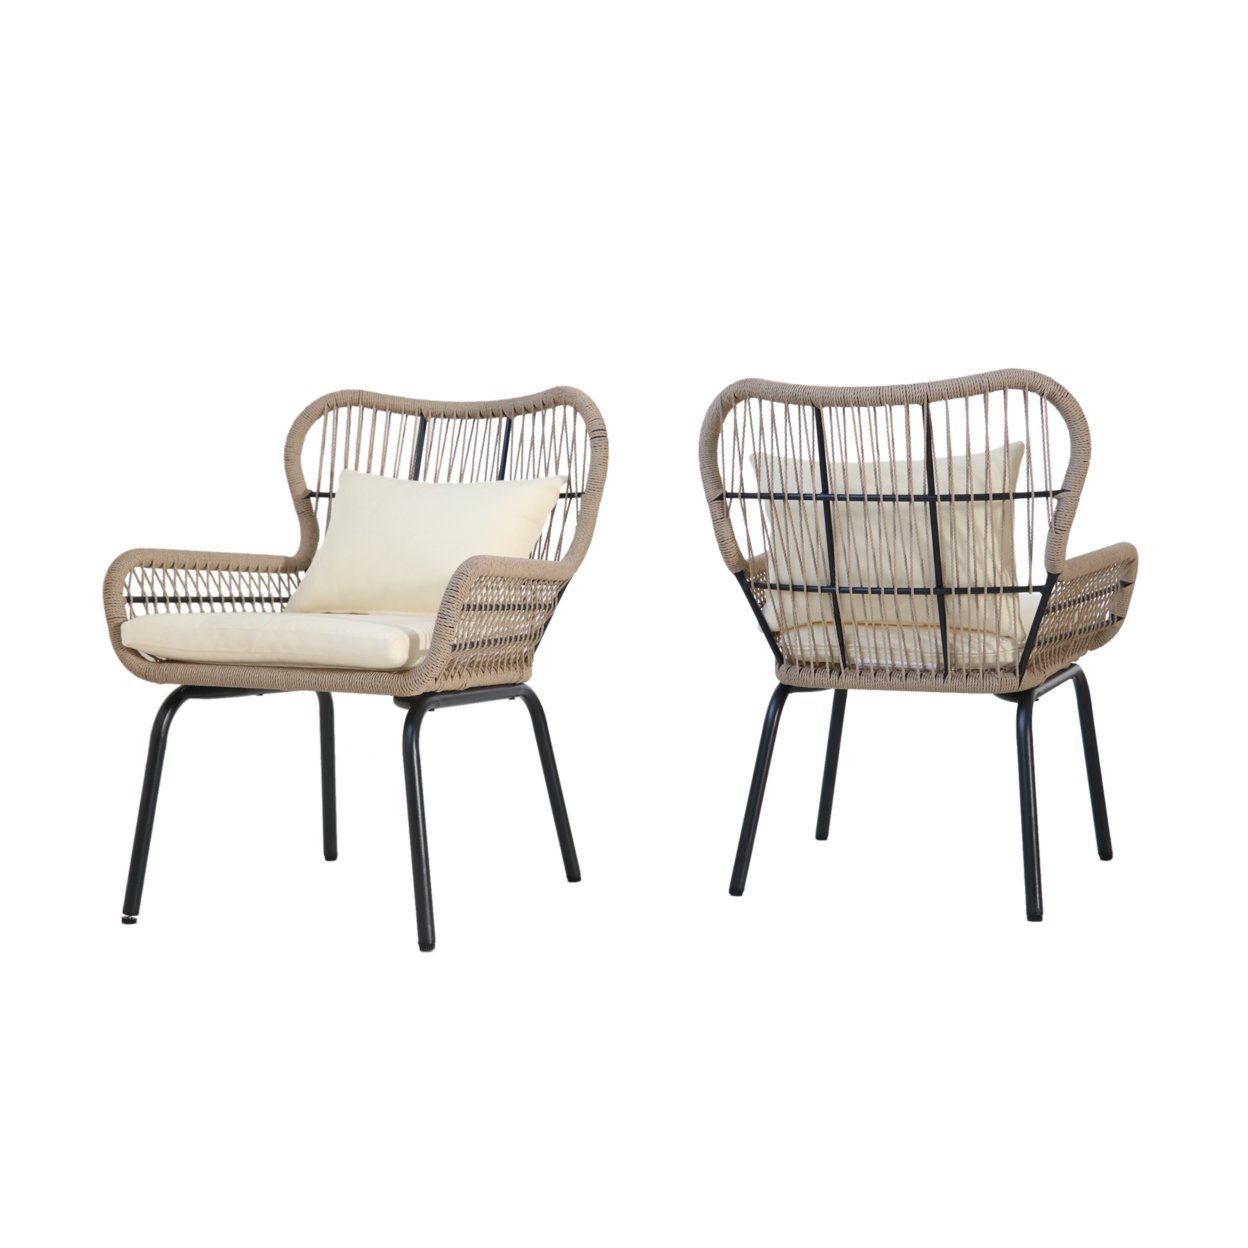 Karen Outdoor Club Chairs, Steel And Rope, Water-Resistant Cushions, Boho - Brown / Beige